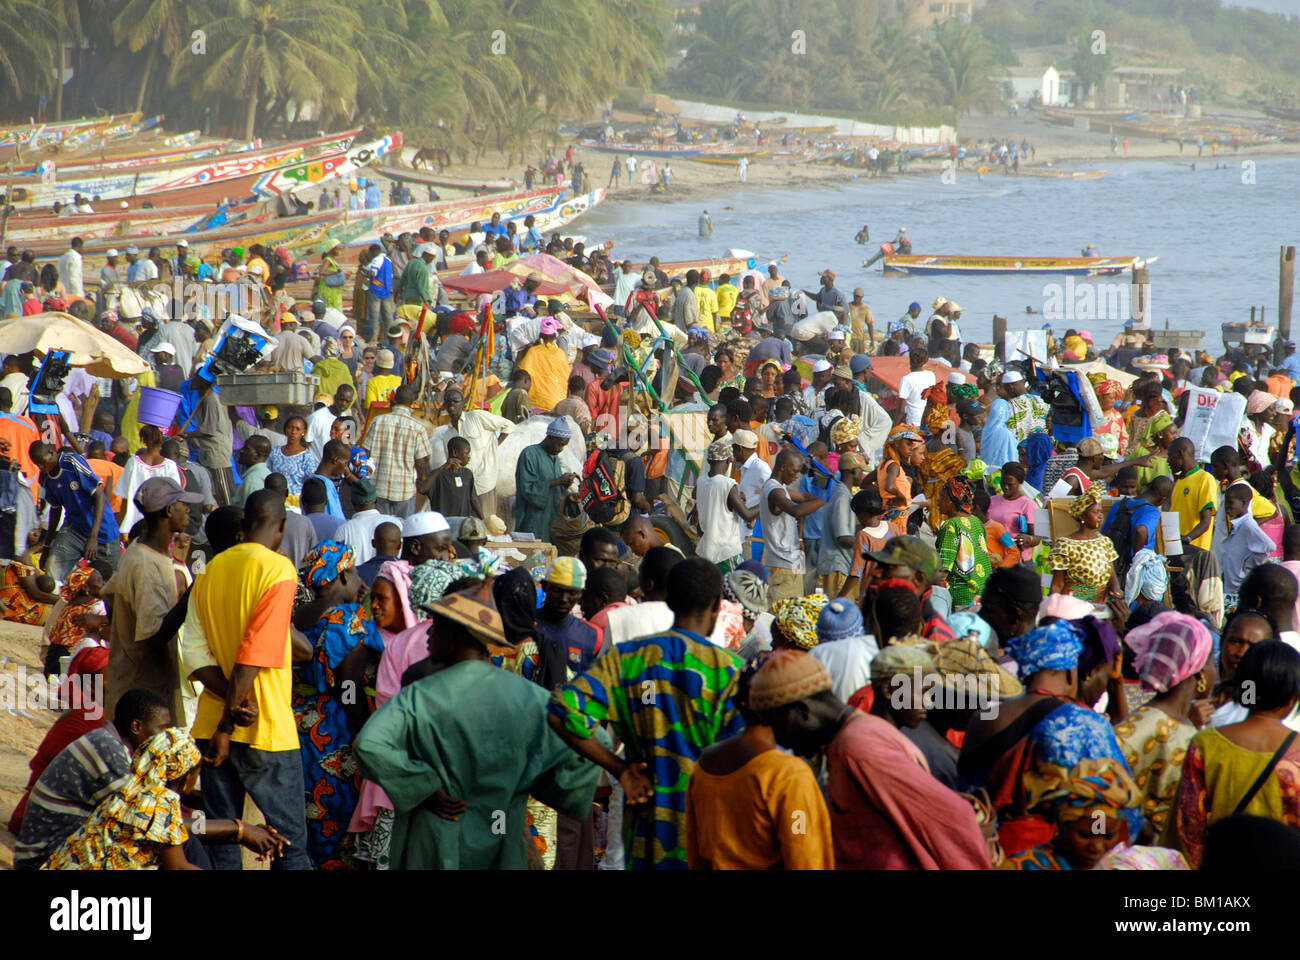 Fishmarket at port, M'Bour, Republic of Senegal, Africa Stock Photo